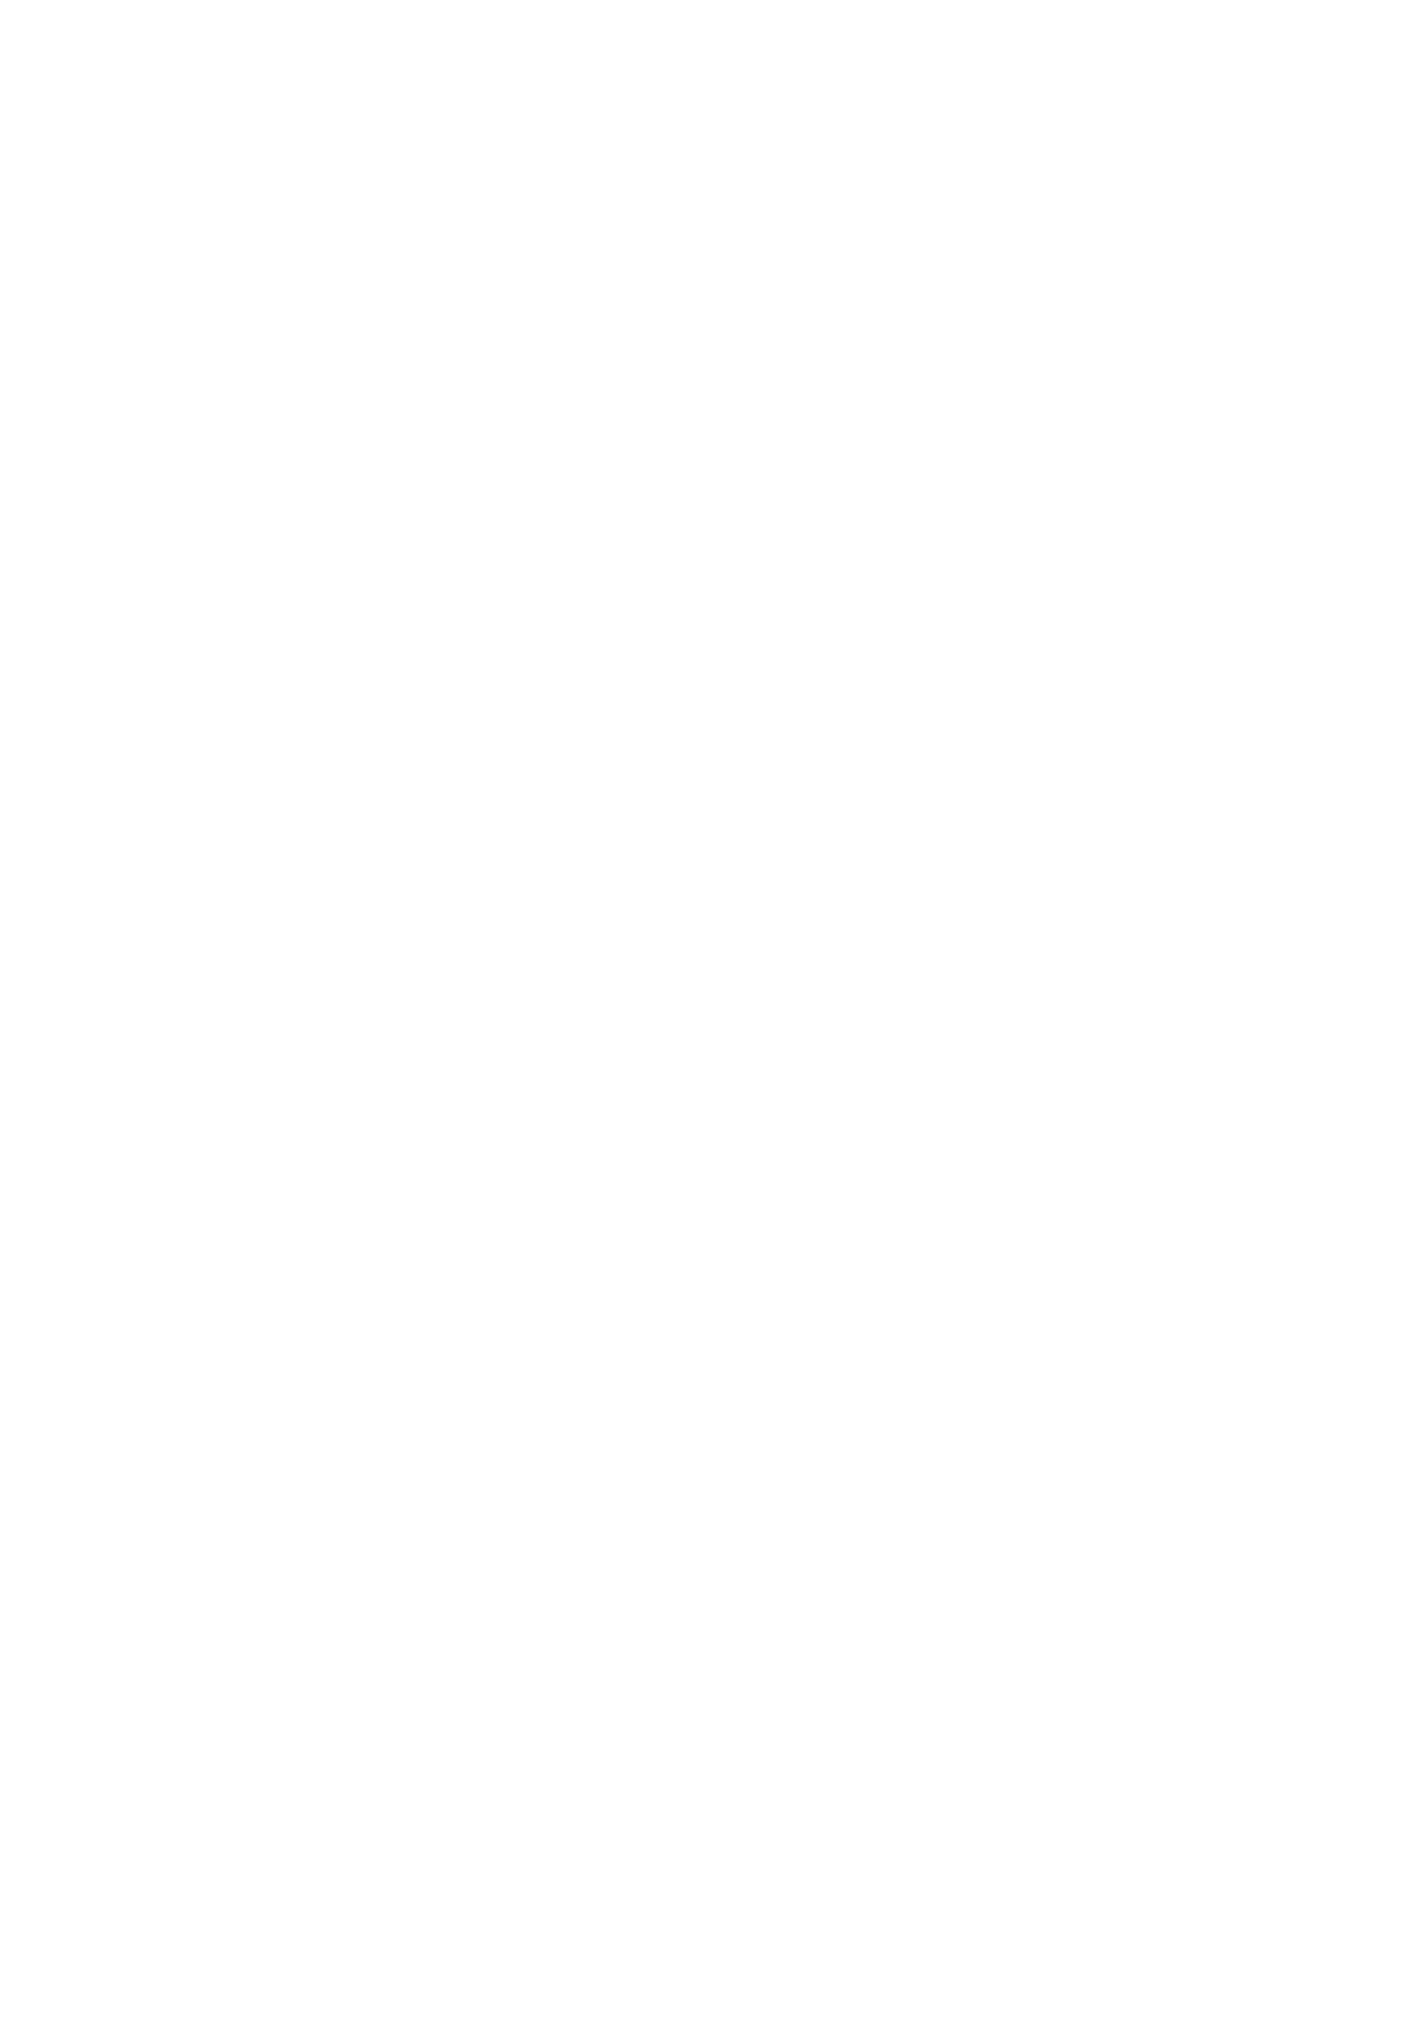 ASPIREagri logo: lightglobe with plant inside